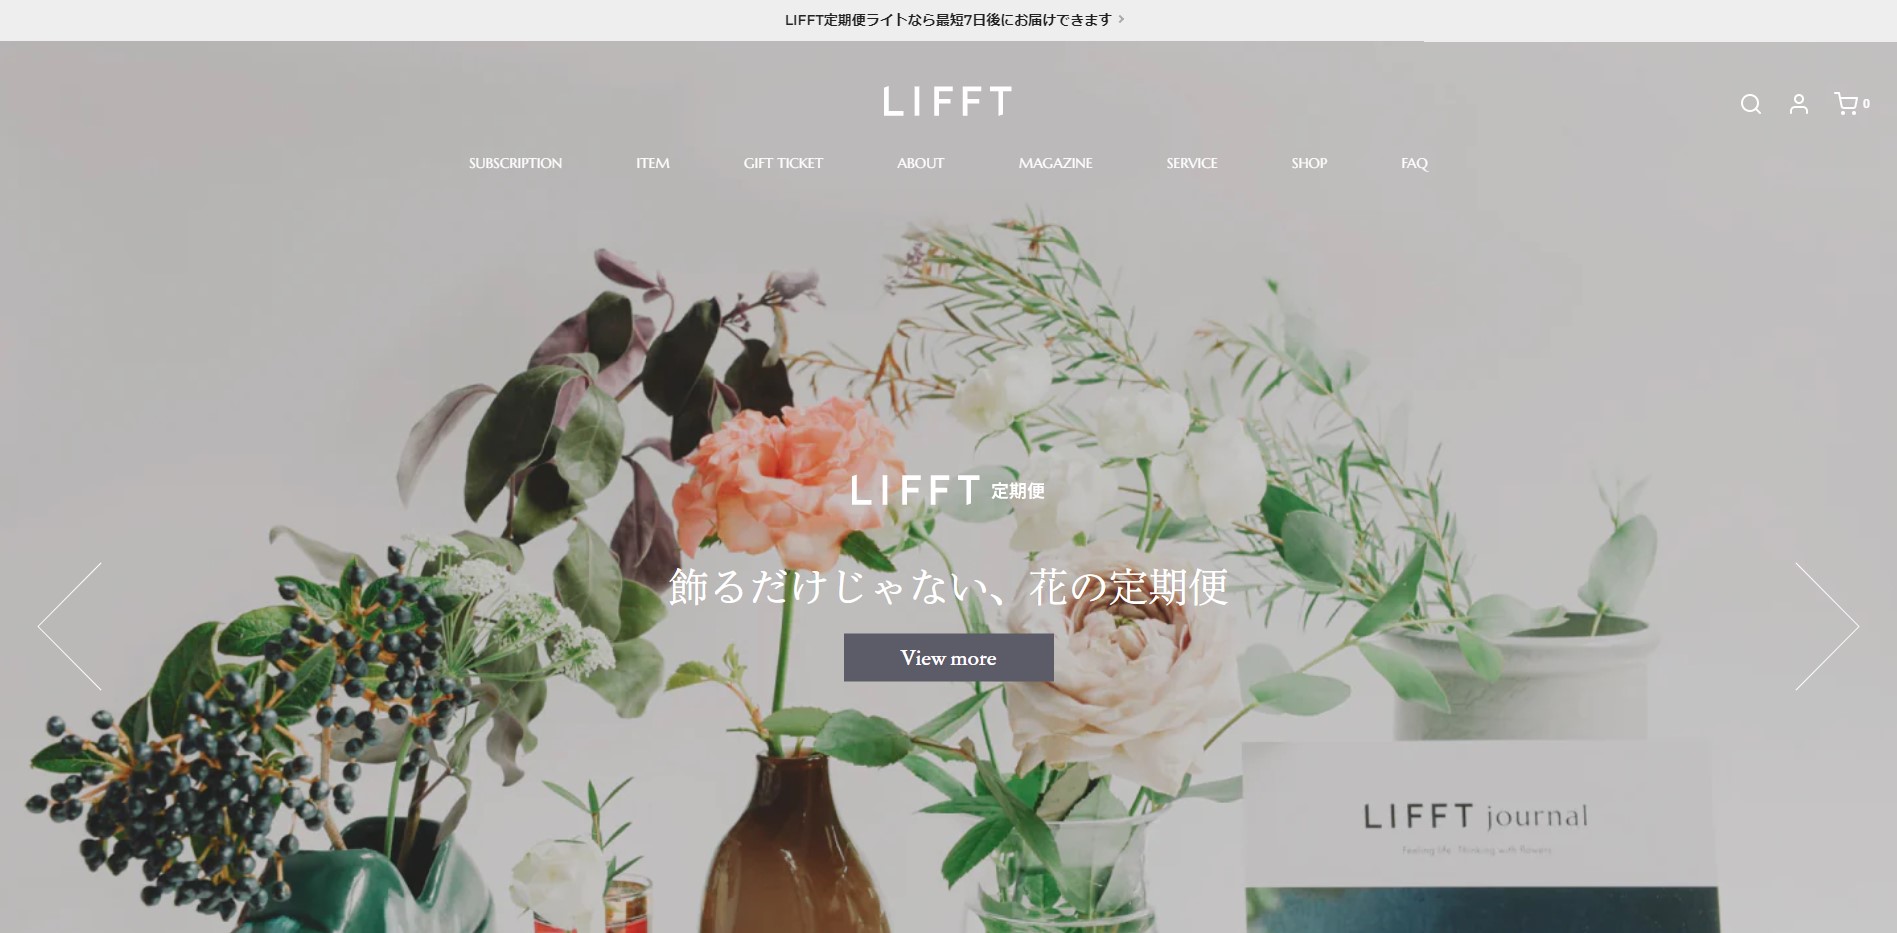 LIFFTのECサイトトップページ